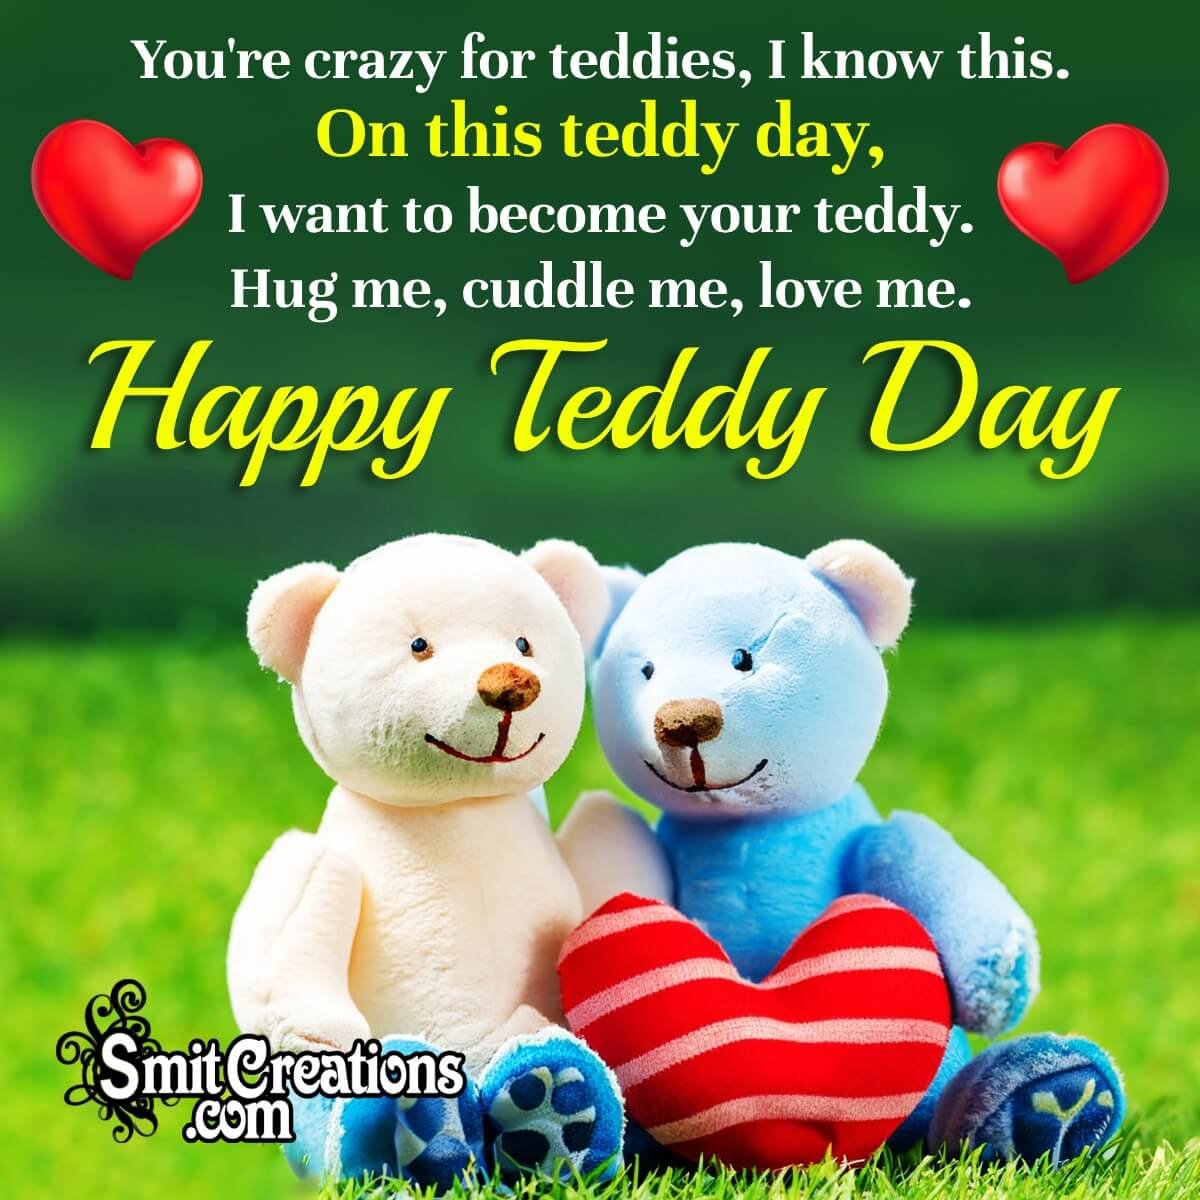 Happy Teddy Bear Day Wishes For Girlfriend